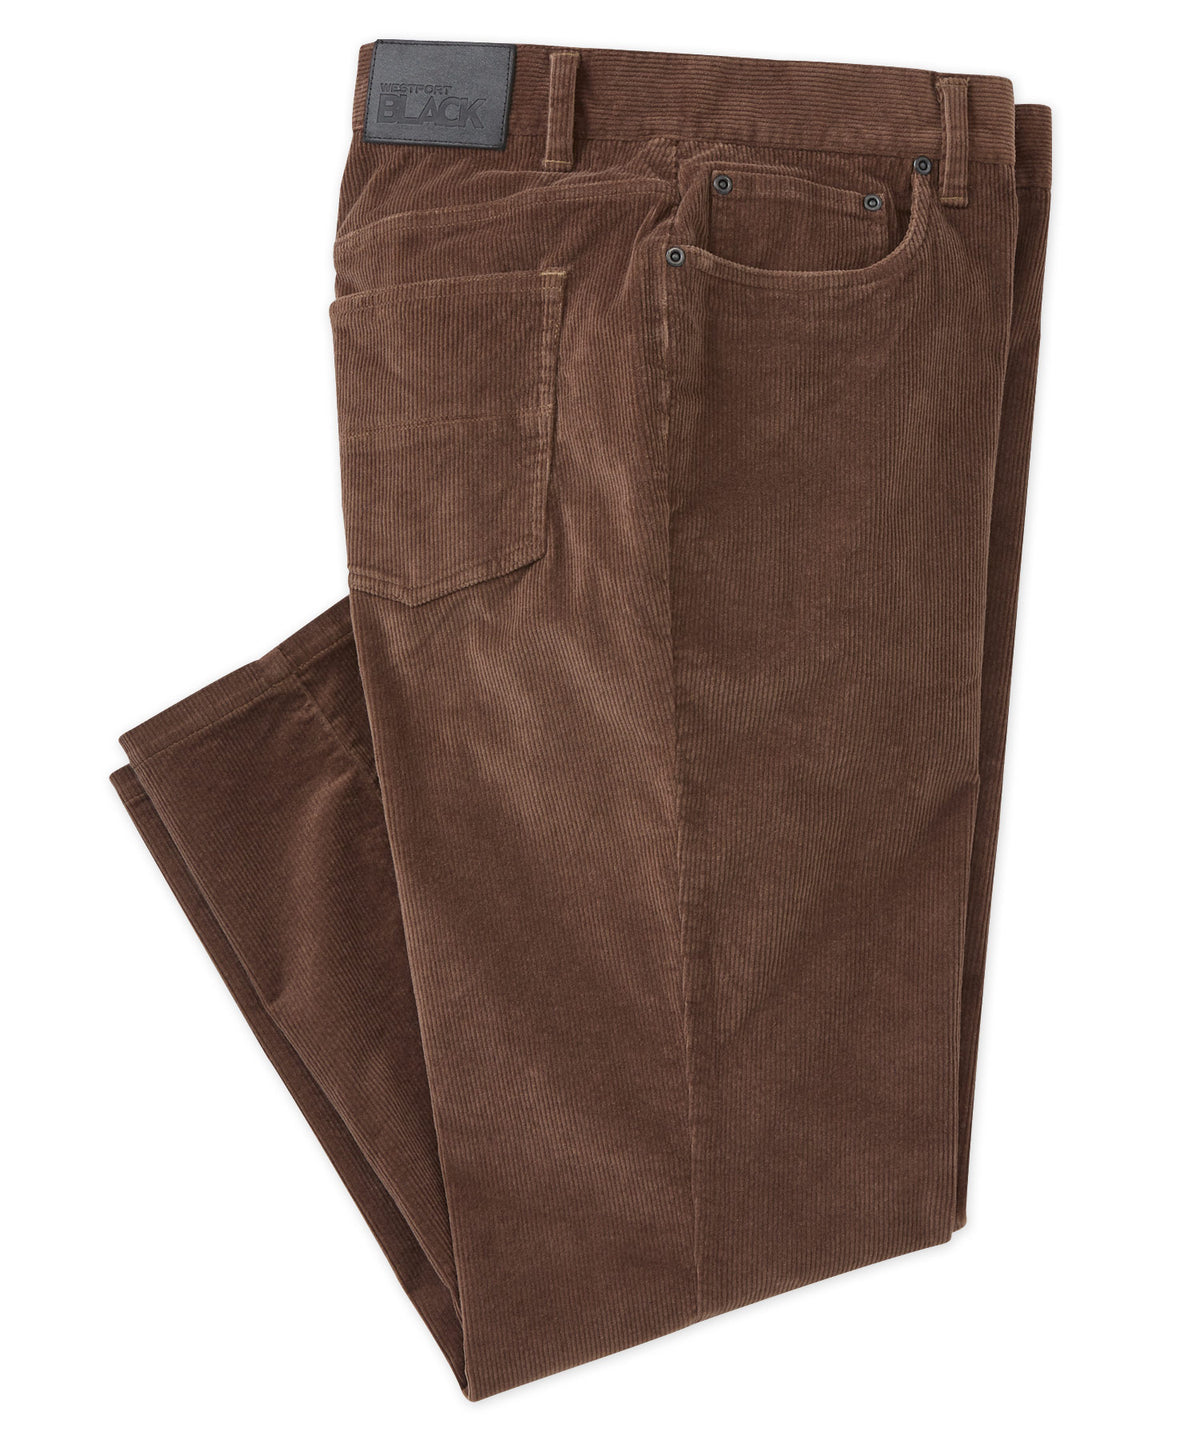 Westport Black Stretch Corduroy 5-Pocket Pant, Men's Big & Tall